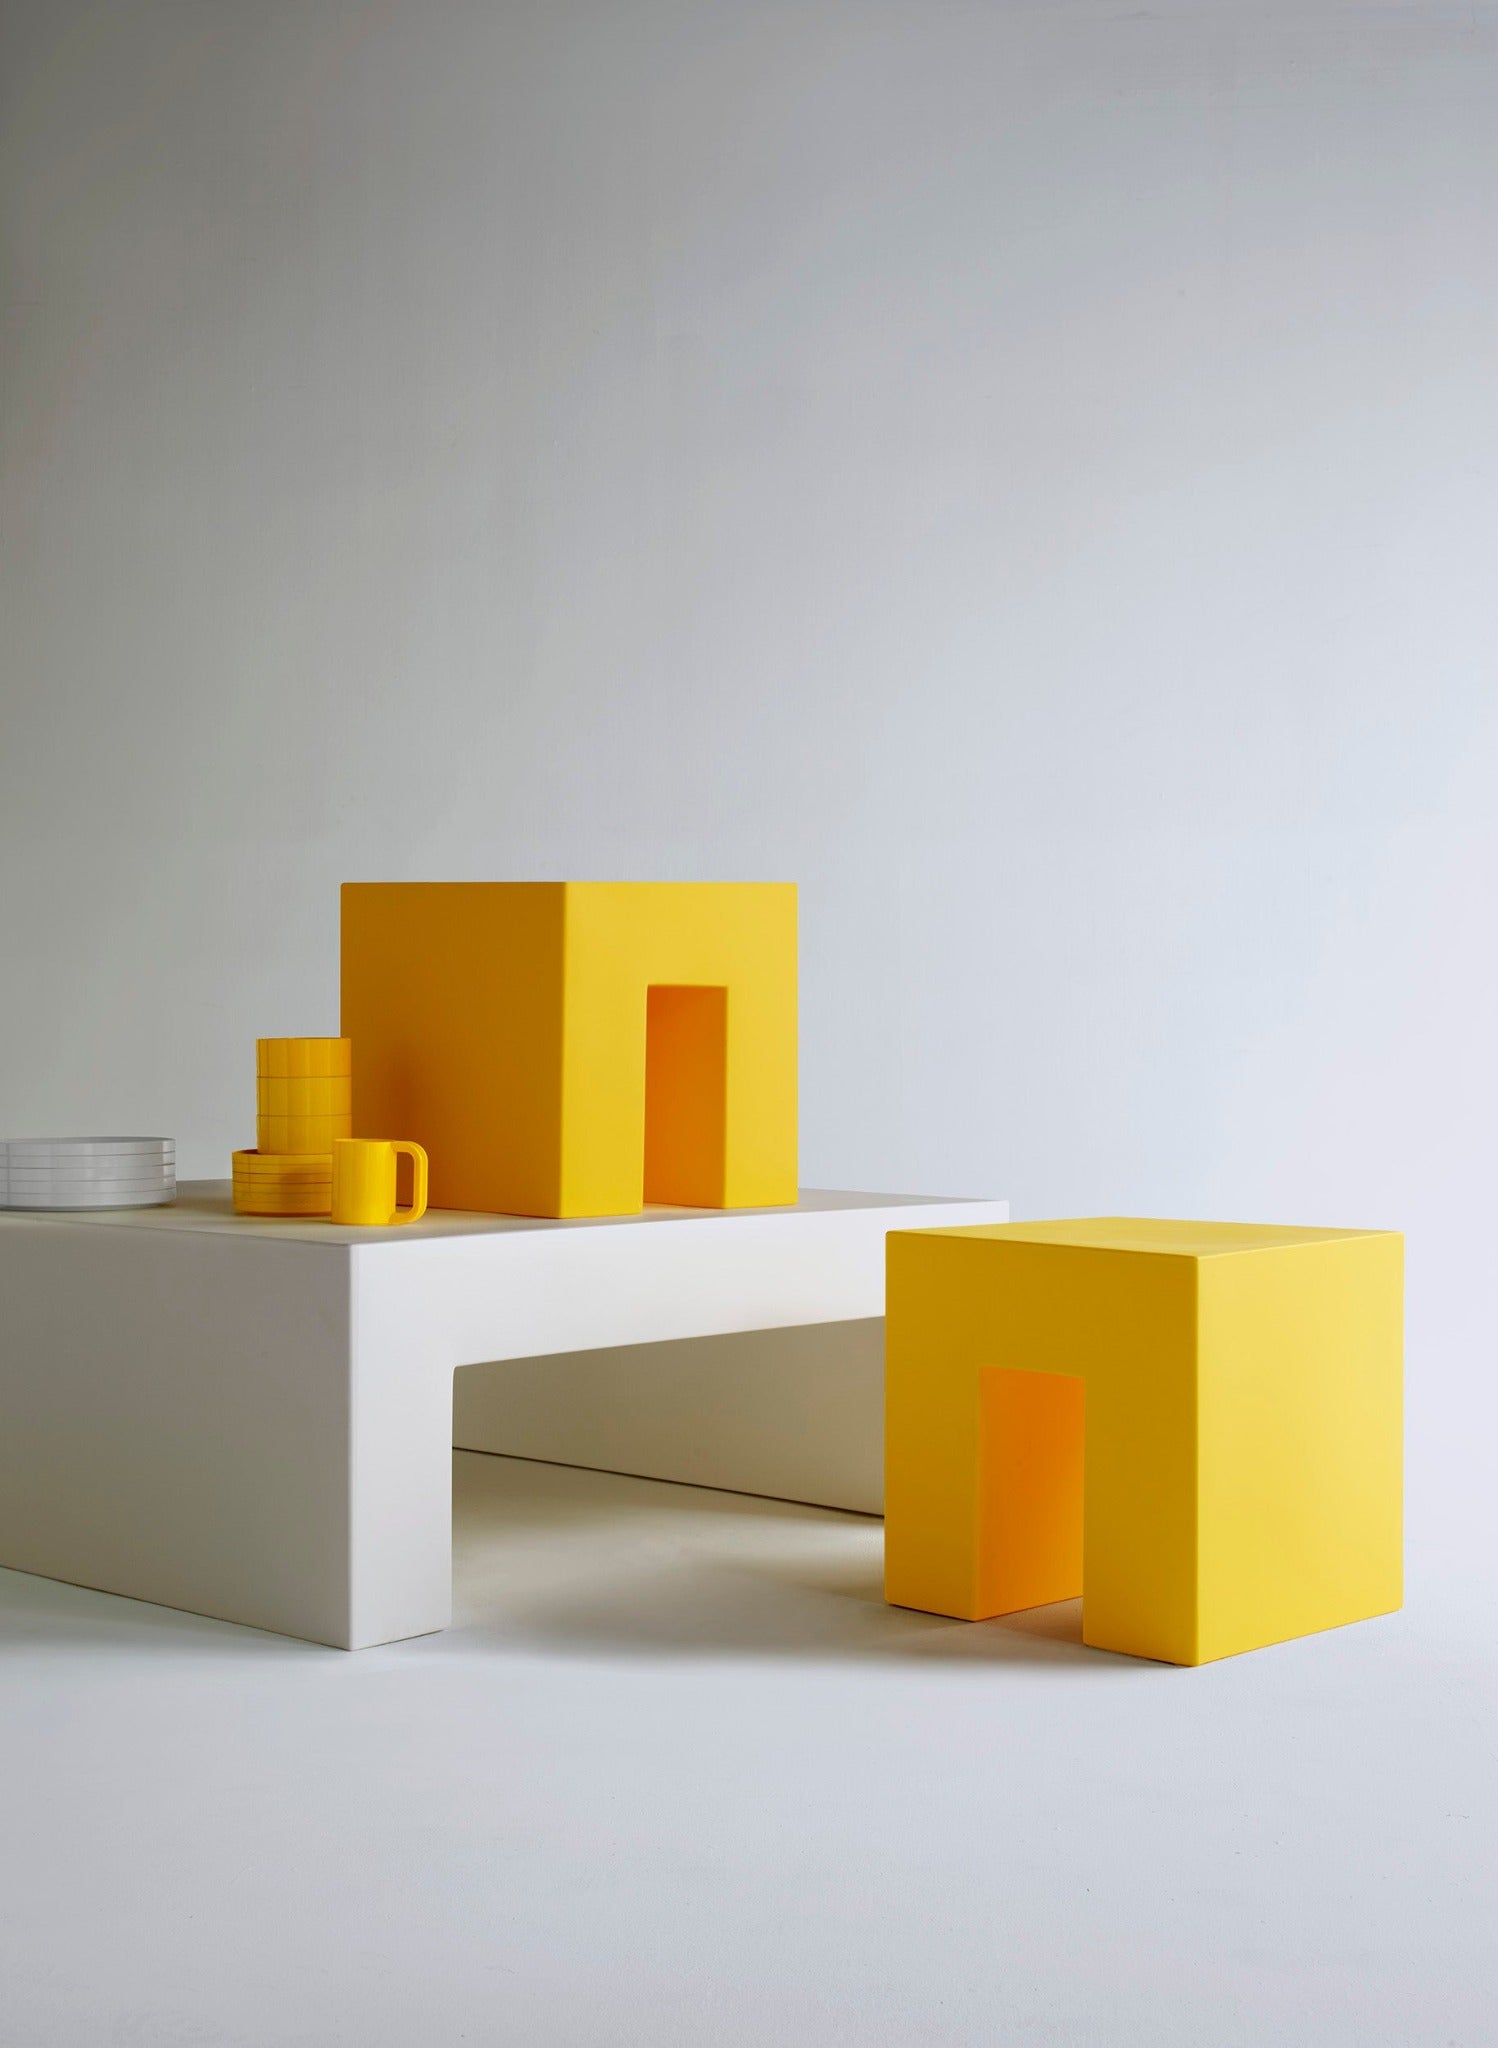 Vignelli Table, Hellerware and Vignelli Cubes